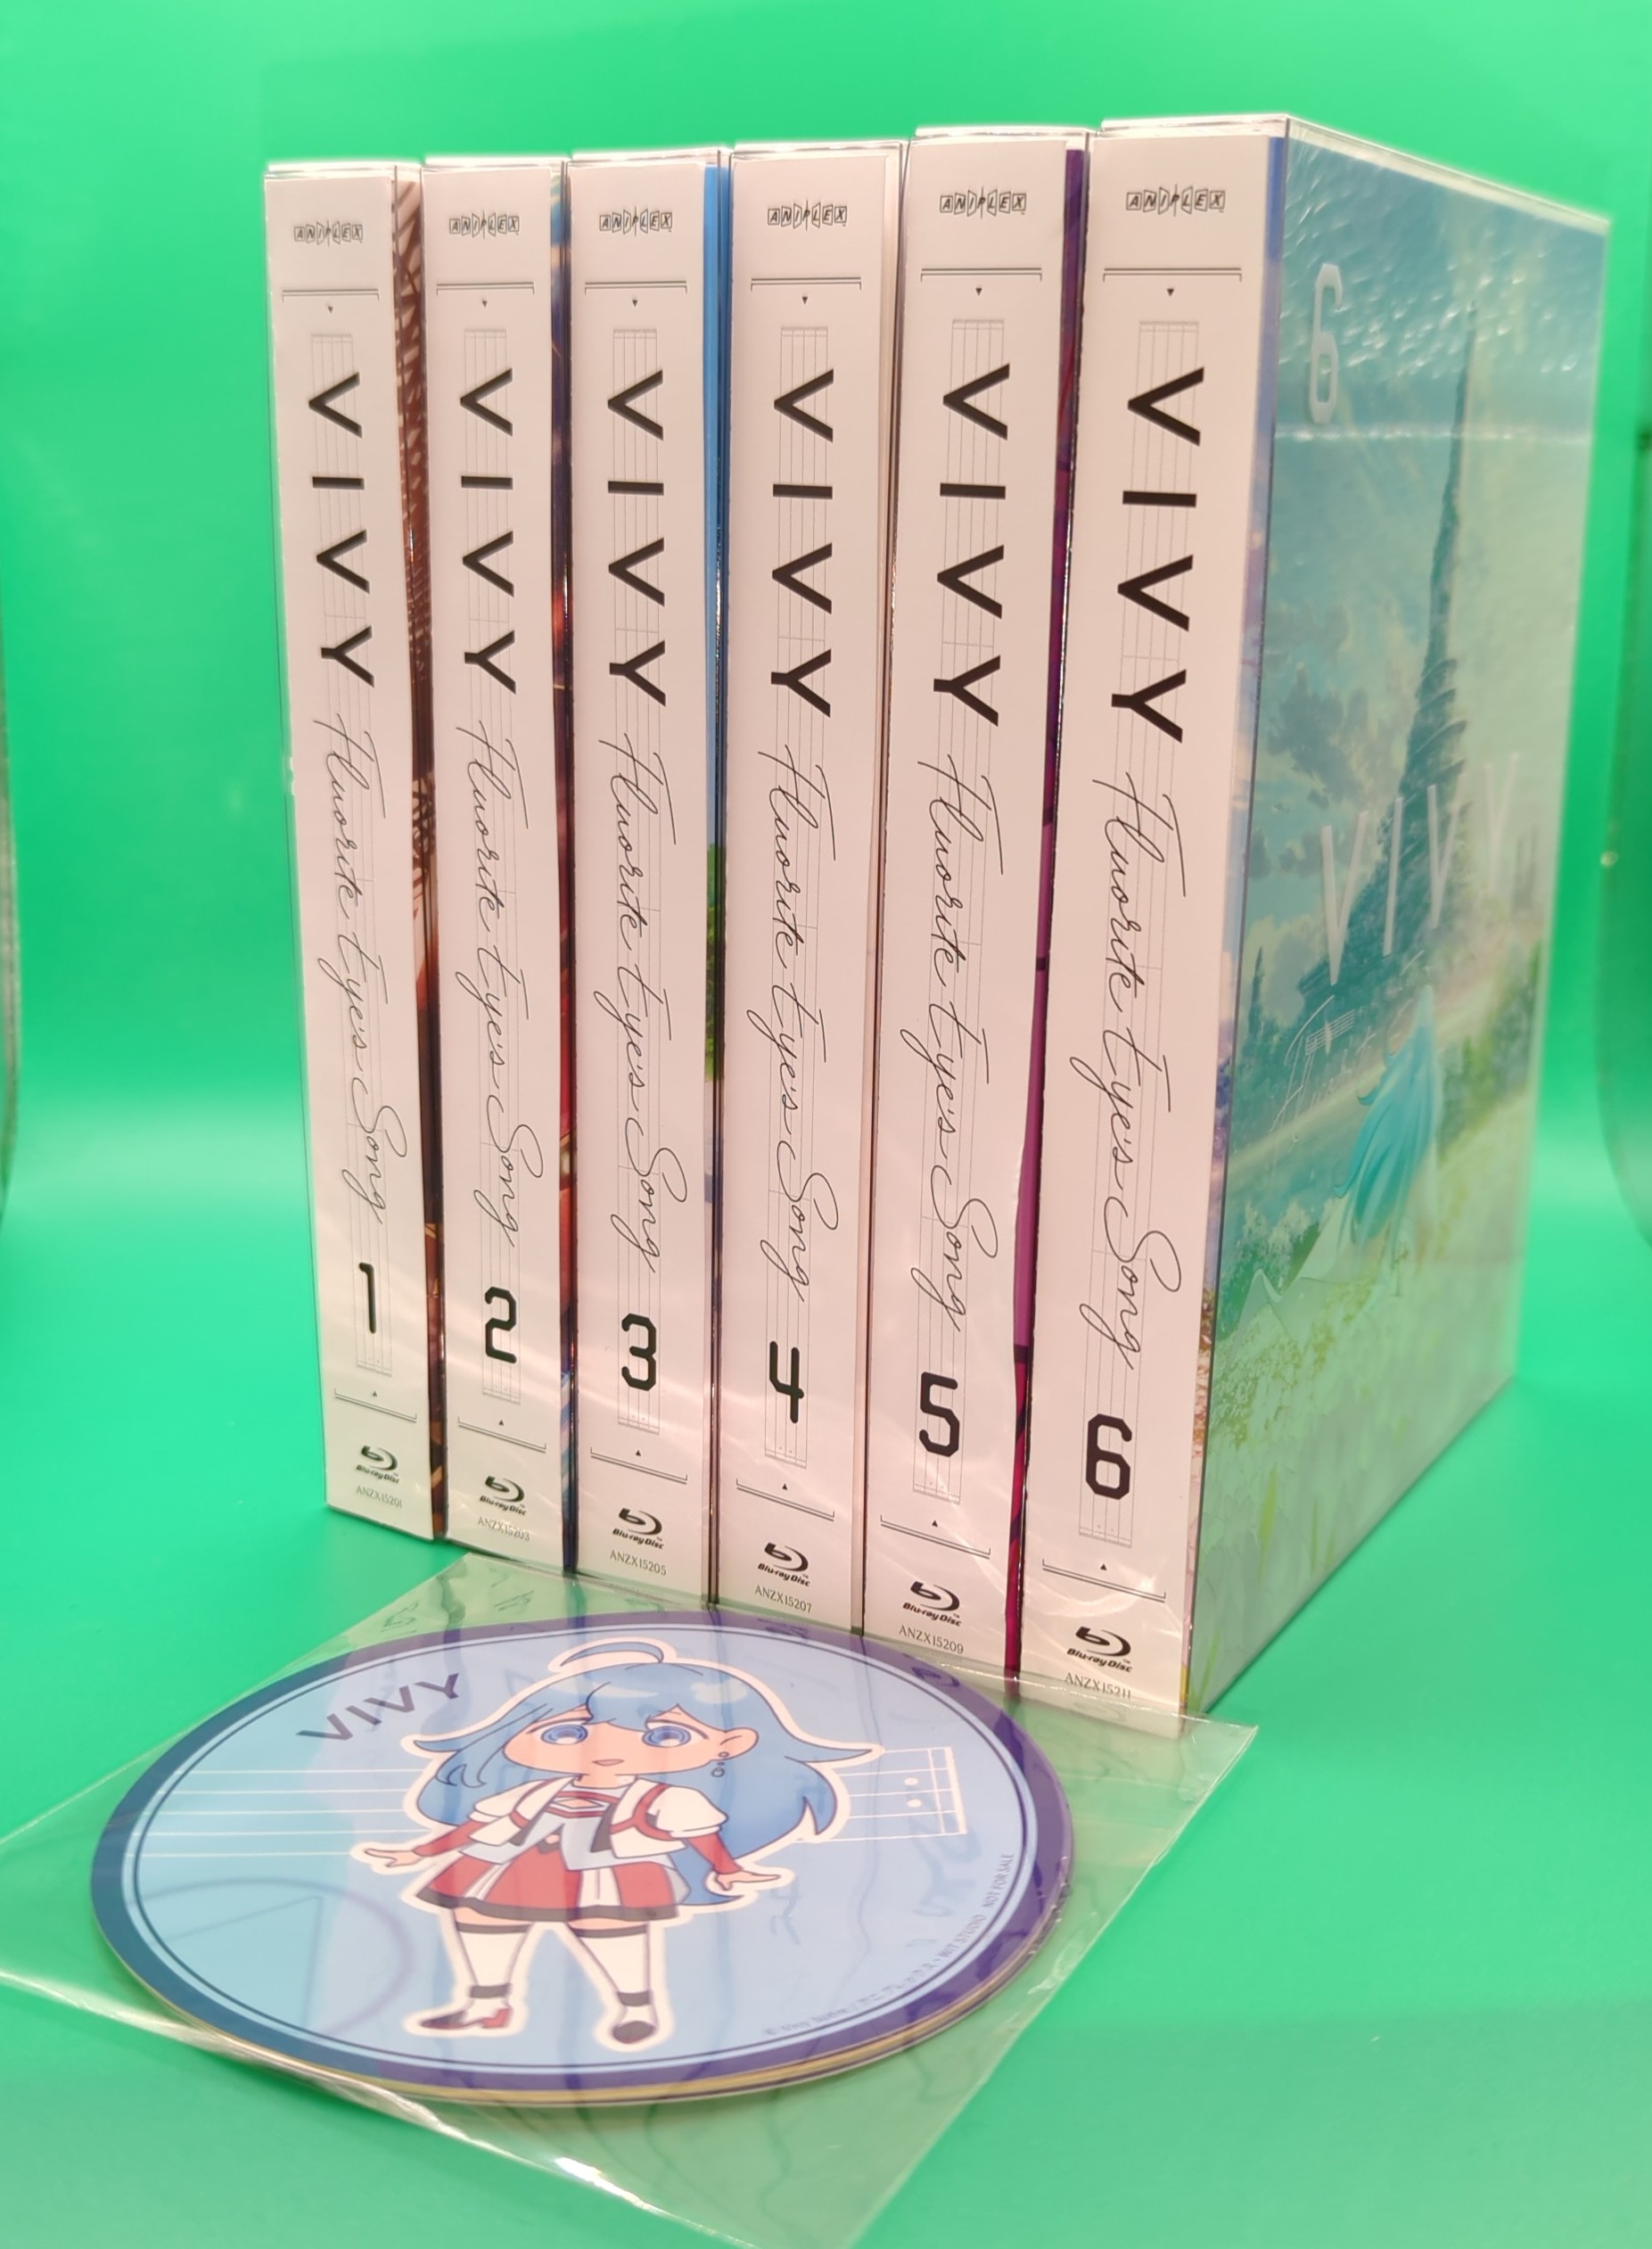 Vivy 全6巻全巻完結セット【完全生産限定版】【Blu-ray】